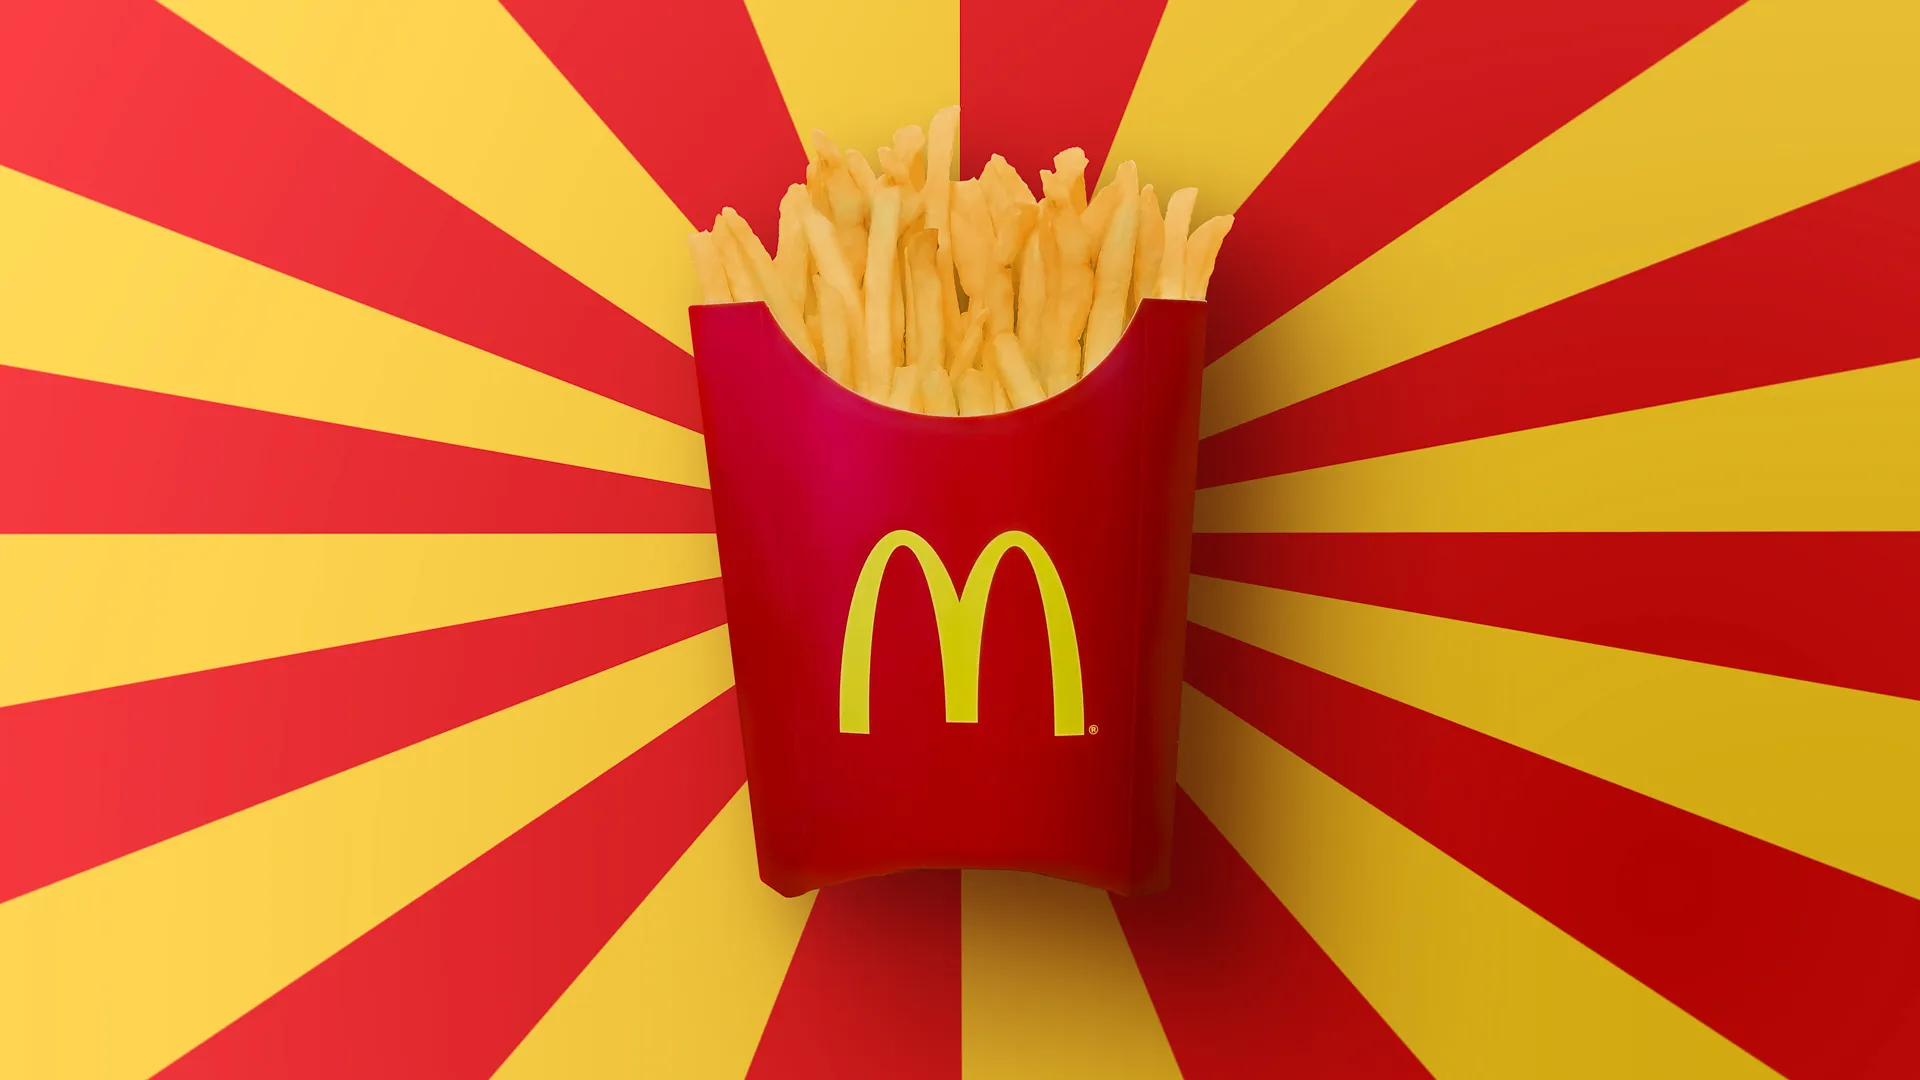 McDonalds fast food chain